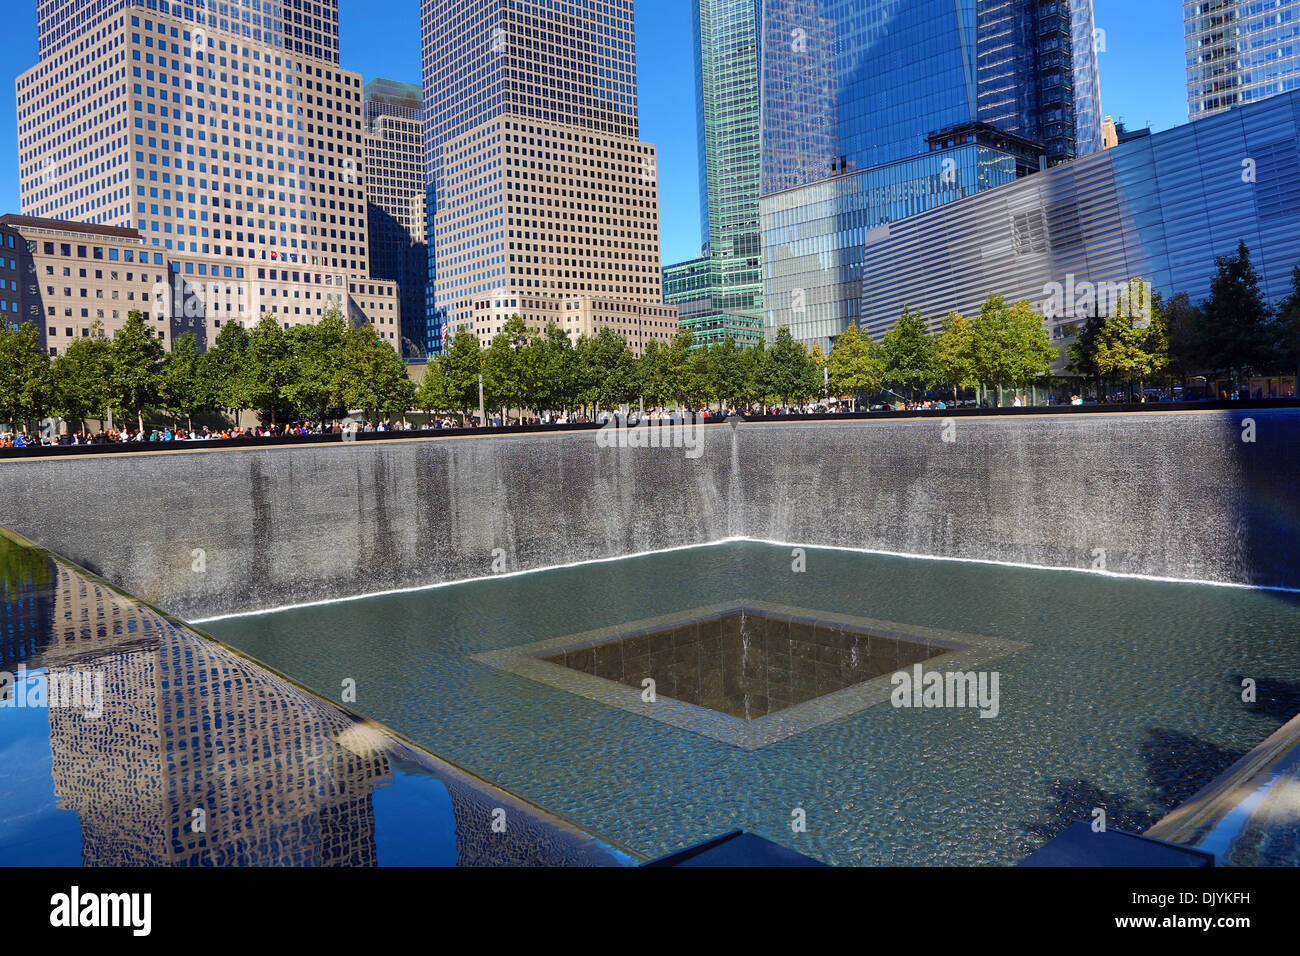 Pour Mémorial National du 11 septembre le 11 septembre 2001 attaque du World Trade Center, New York. Nord Banque D'Images